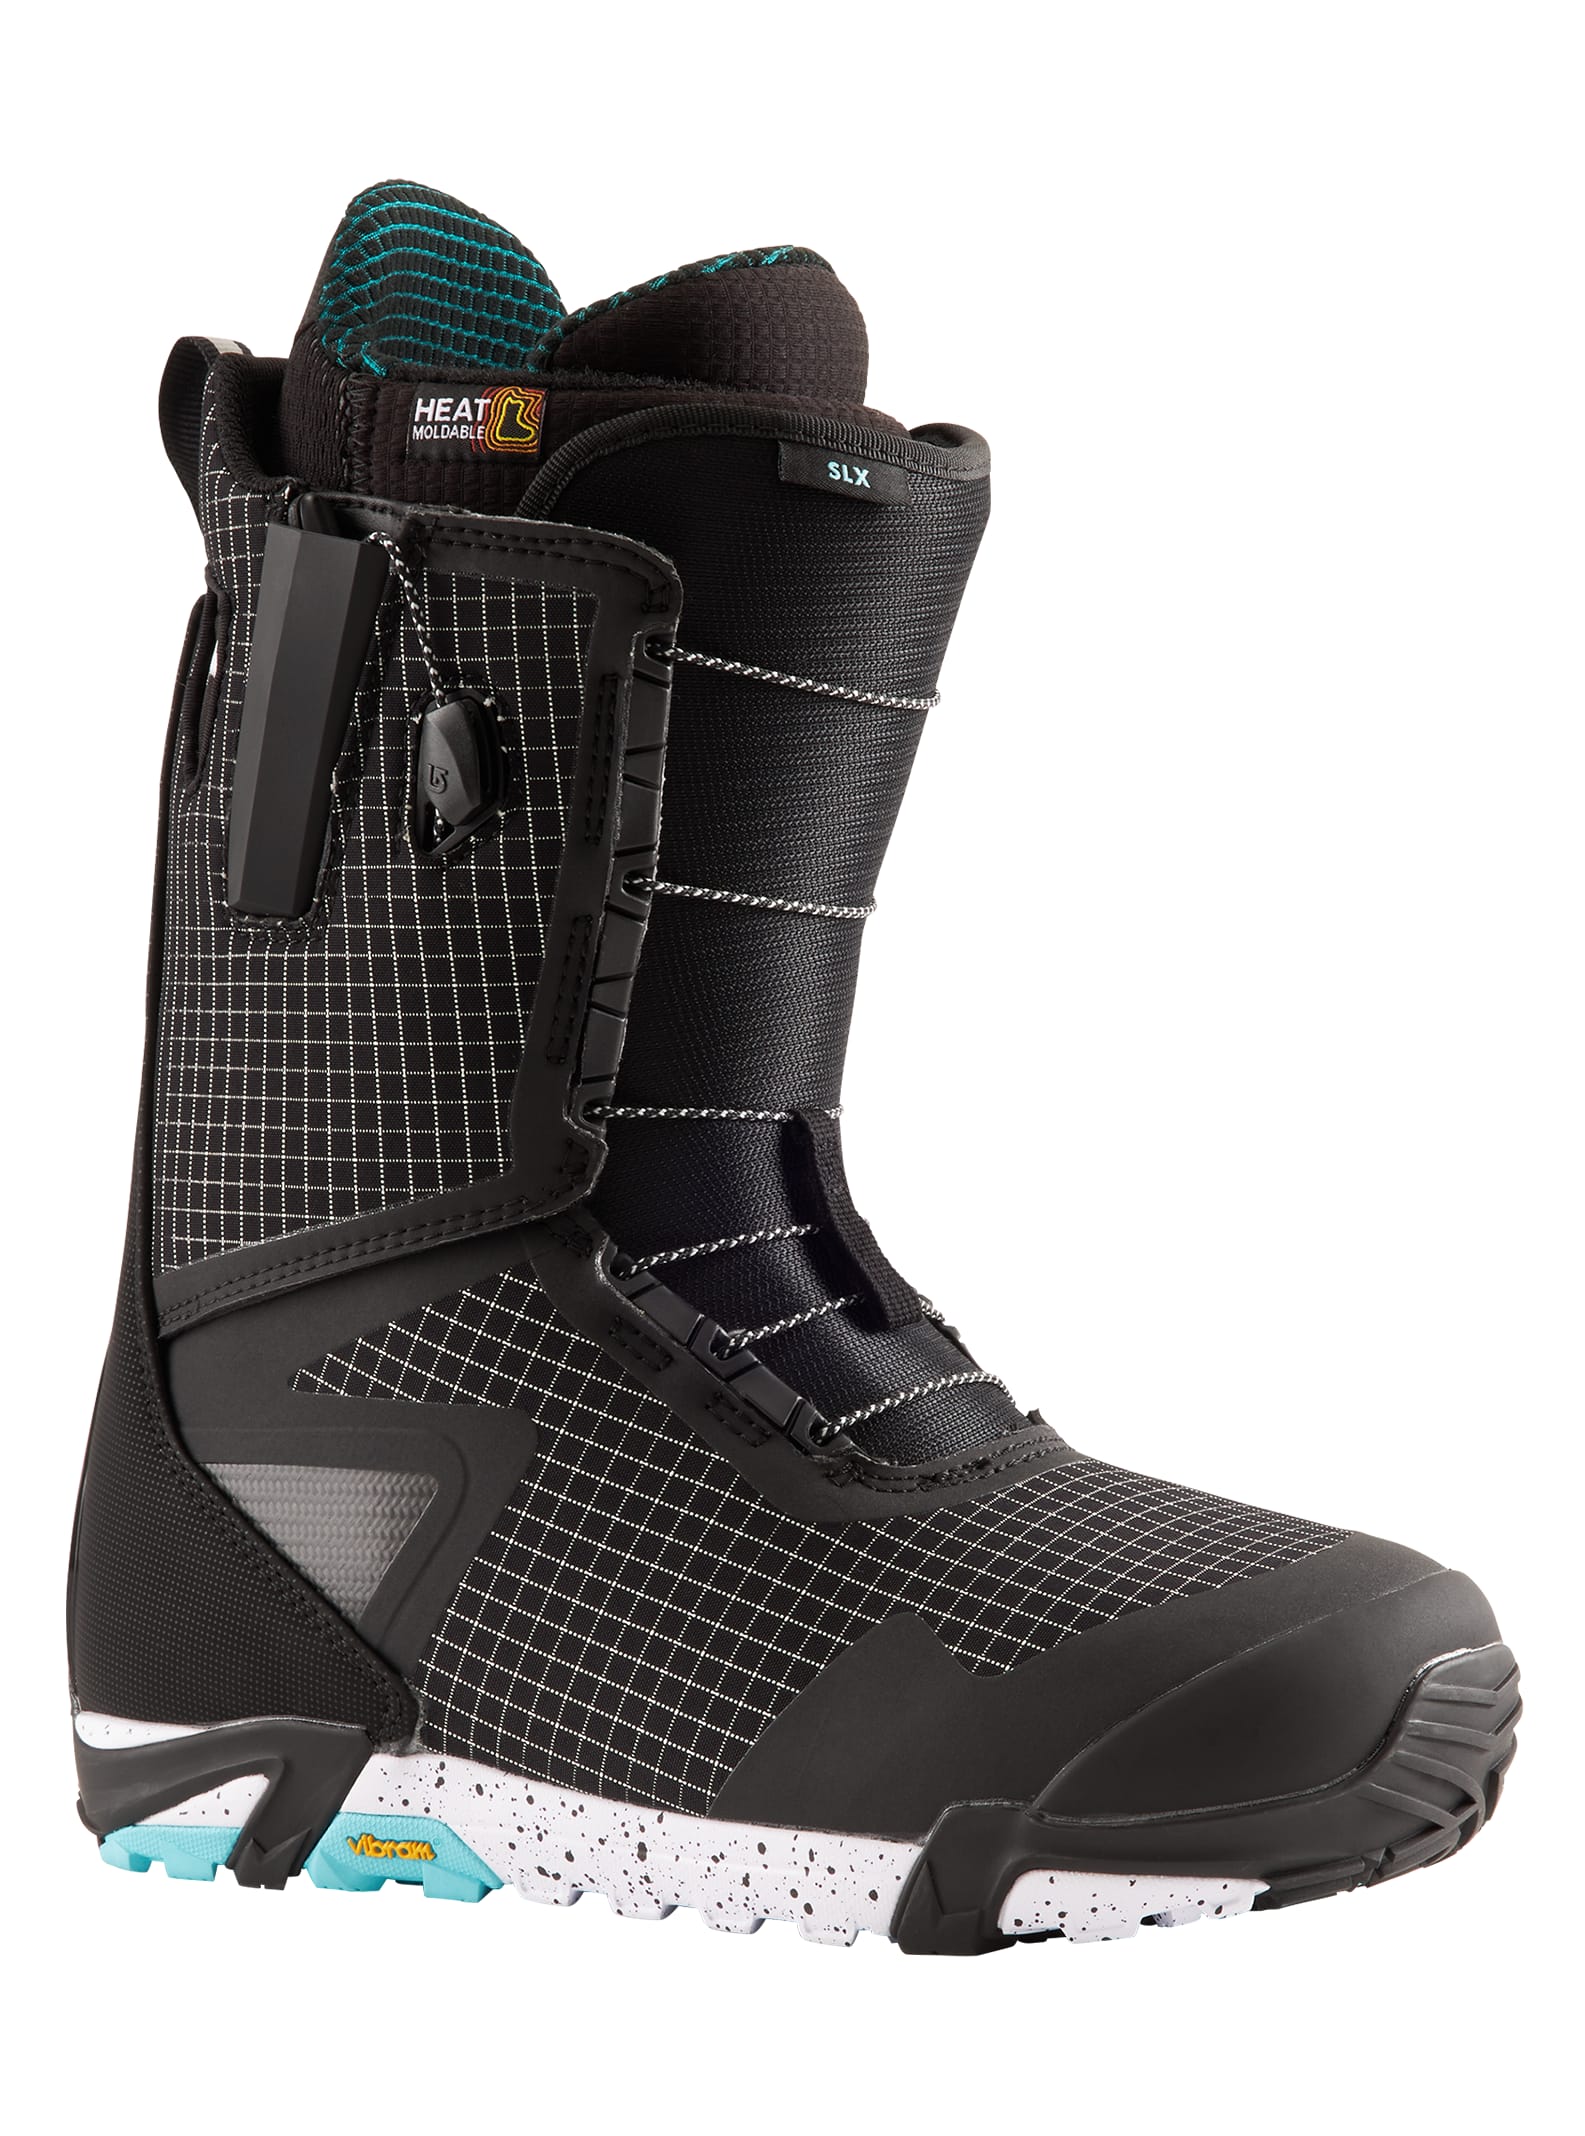 Burton - Boots de snowboard SLX homme | Burton.com Hiver 2022 FR